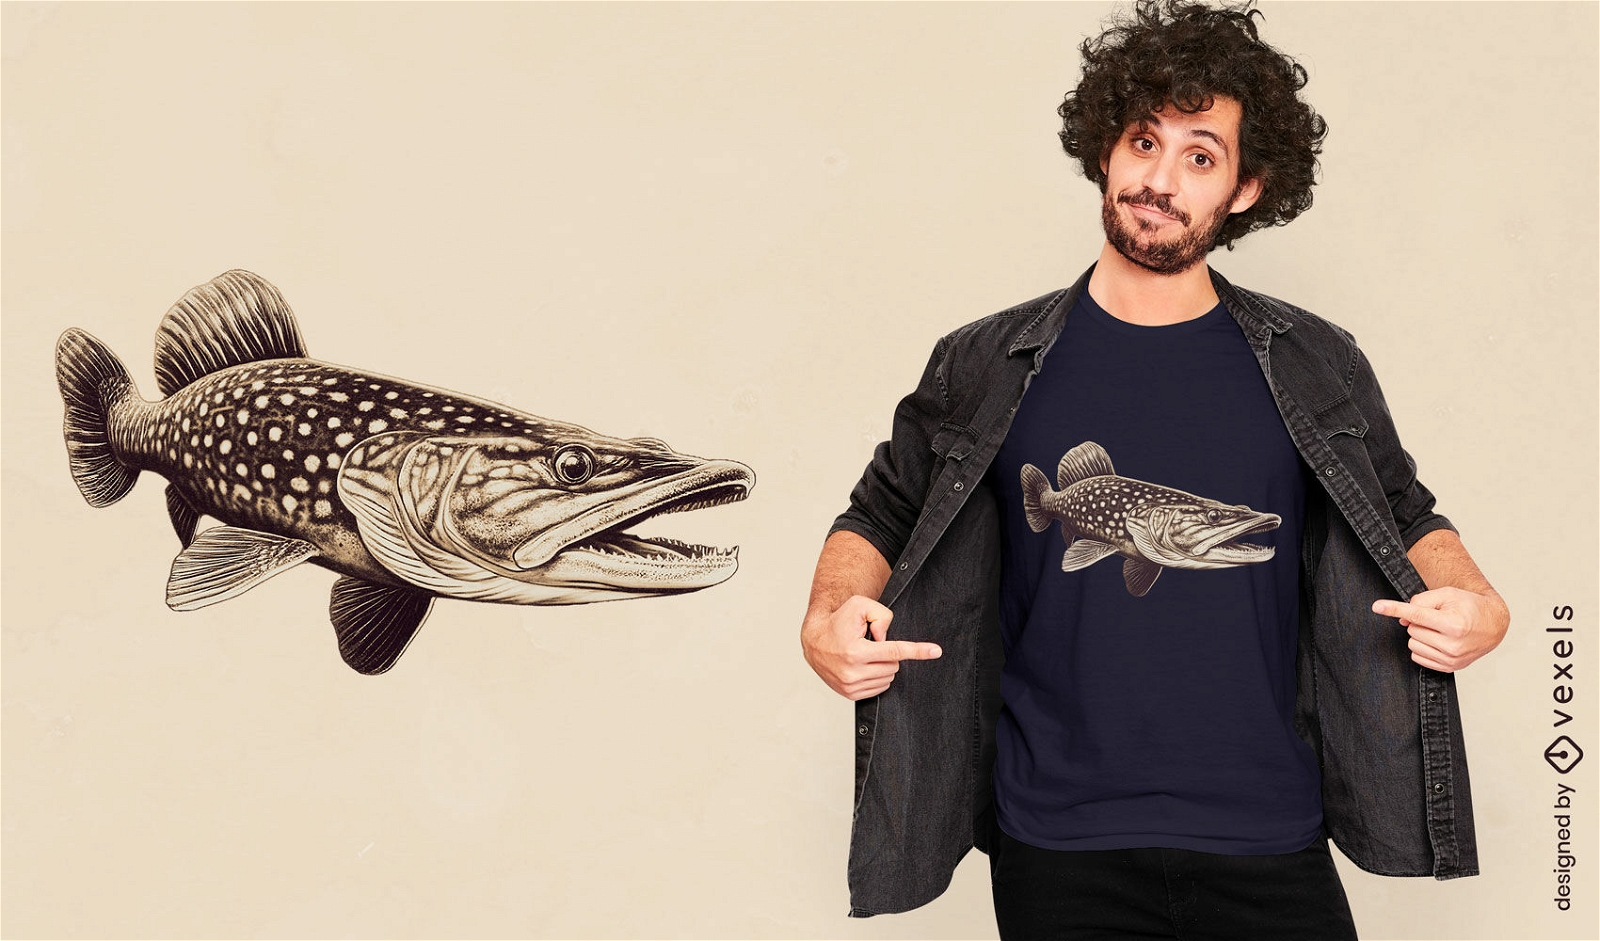 Pike fish monchrome illustration t-shirt design